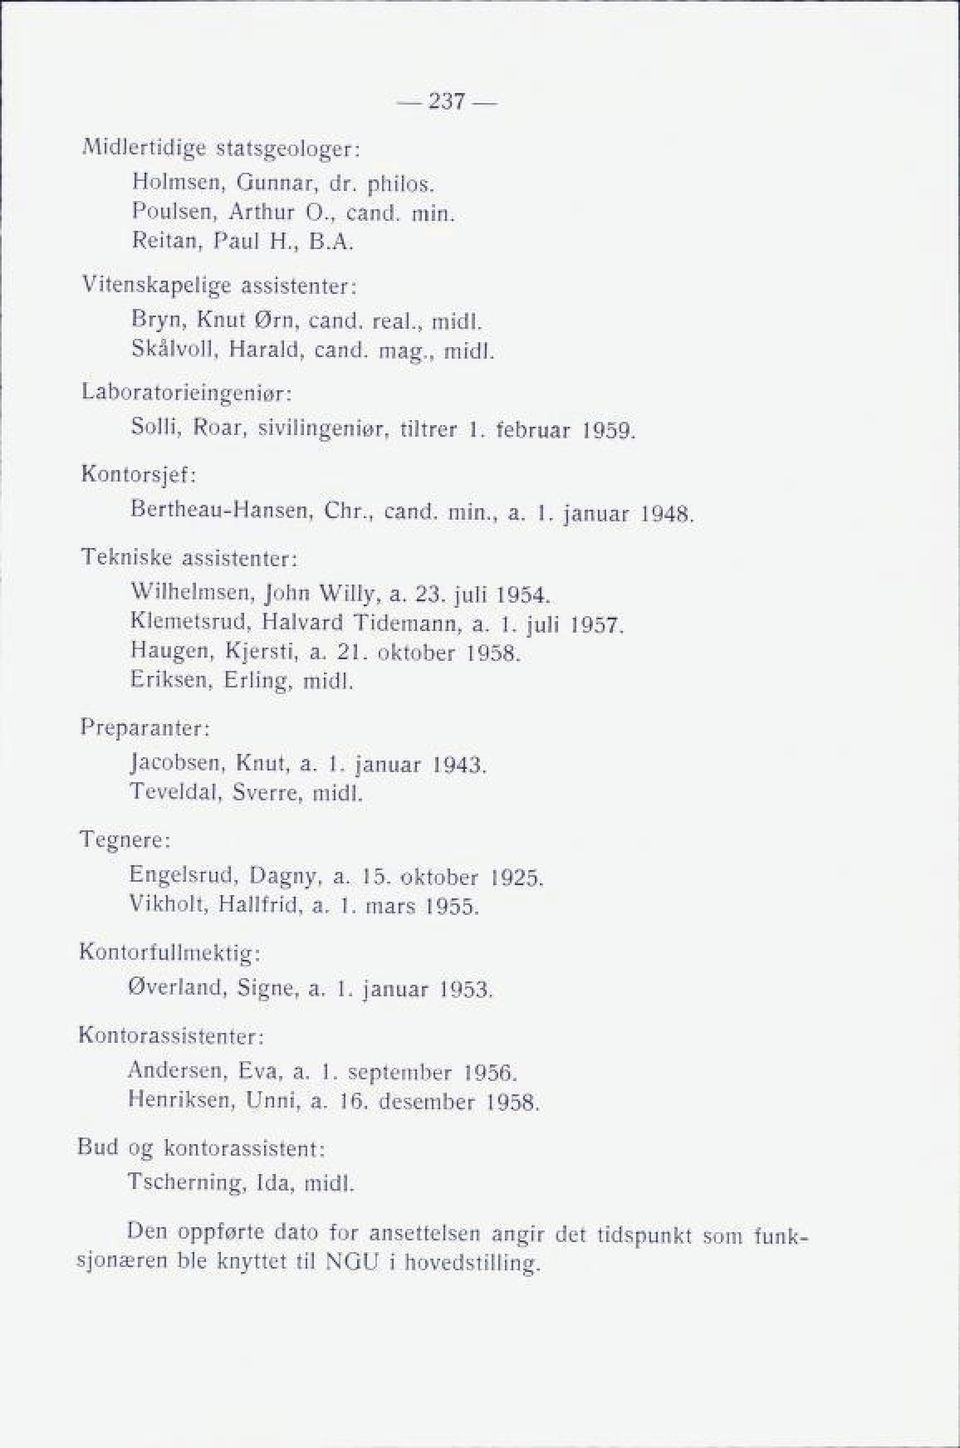 23. juli 1954 Klemetsrud, Halvard Tidemann, a. 1. juli 1957. Haugen, Kjersti, a. 21. oktober 1958. Eriksen, Erling, midl. Preparanter: Tegnere: Jacobsen, Knut, a. 1. januar 1943 Teveldal, Sverre, midl.